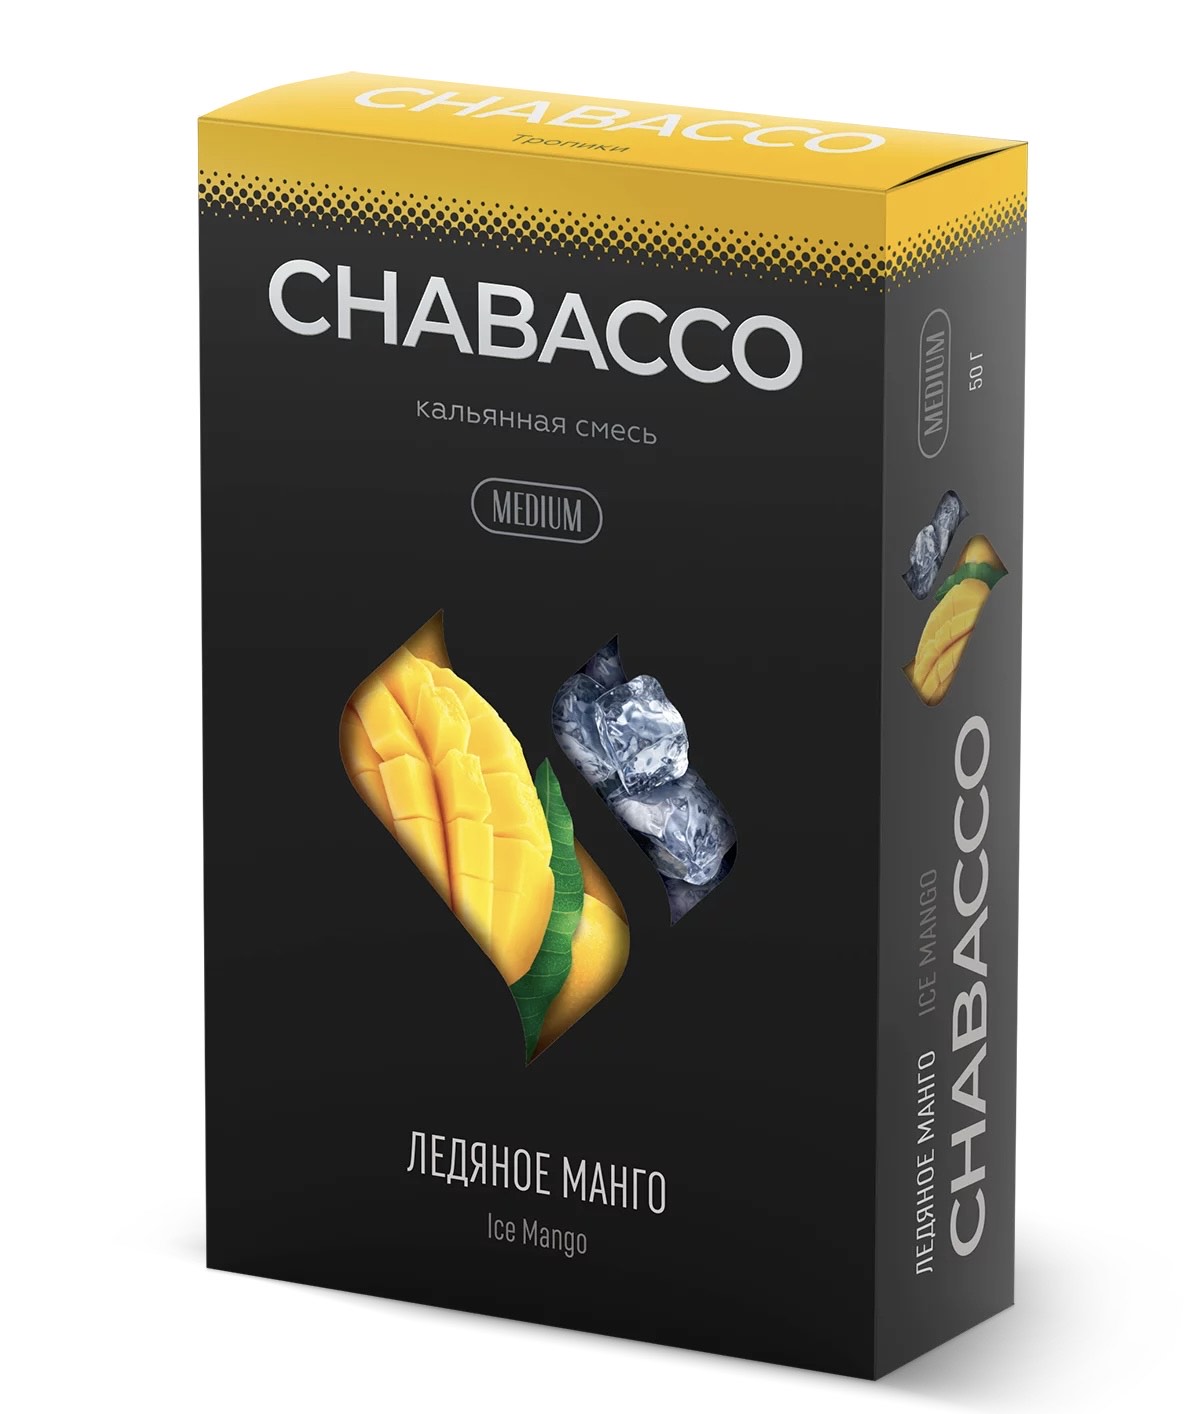 Chabacco - Medium - Ice Mango - ( Ледяное Манго ) - 50 g